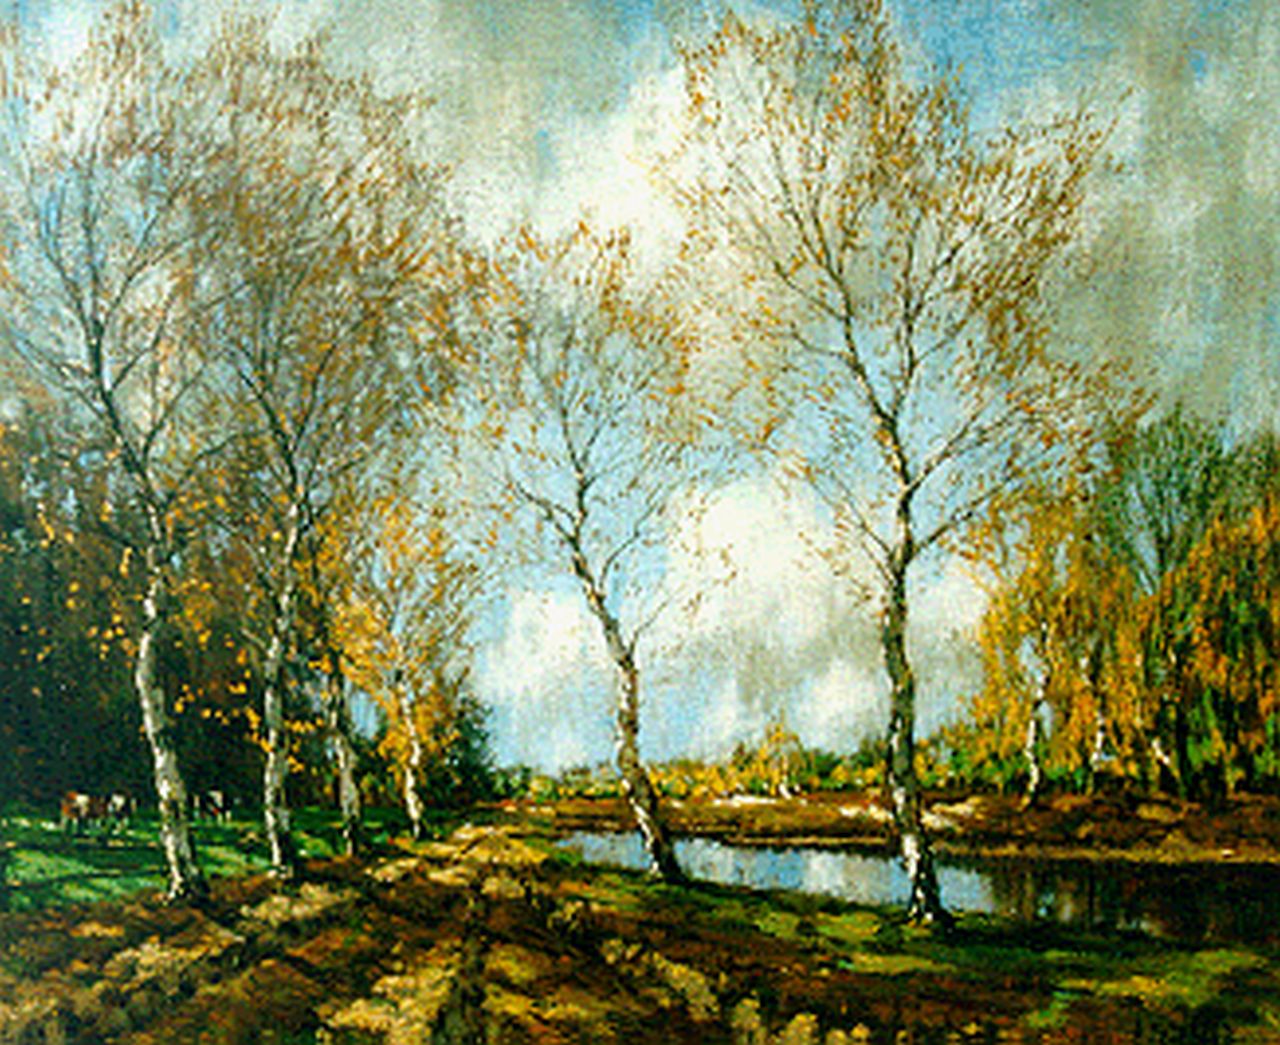 Gorter A.M.  | 'Arnold' Marc Gorter, Autumn landscape, Öl auf Leinwand 46,3 x 56,2 cm, signed l.r.